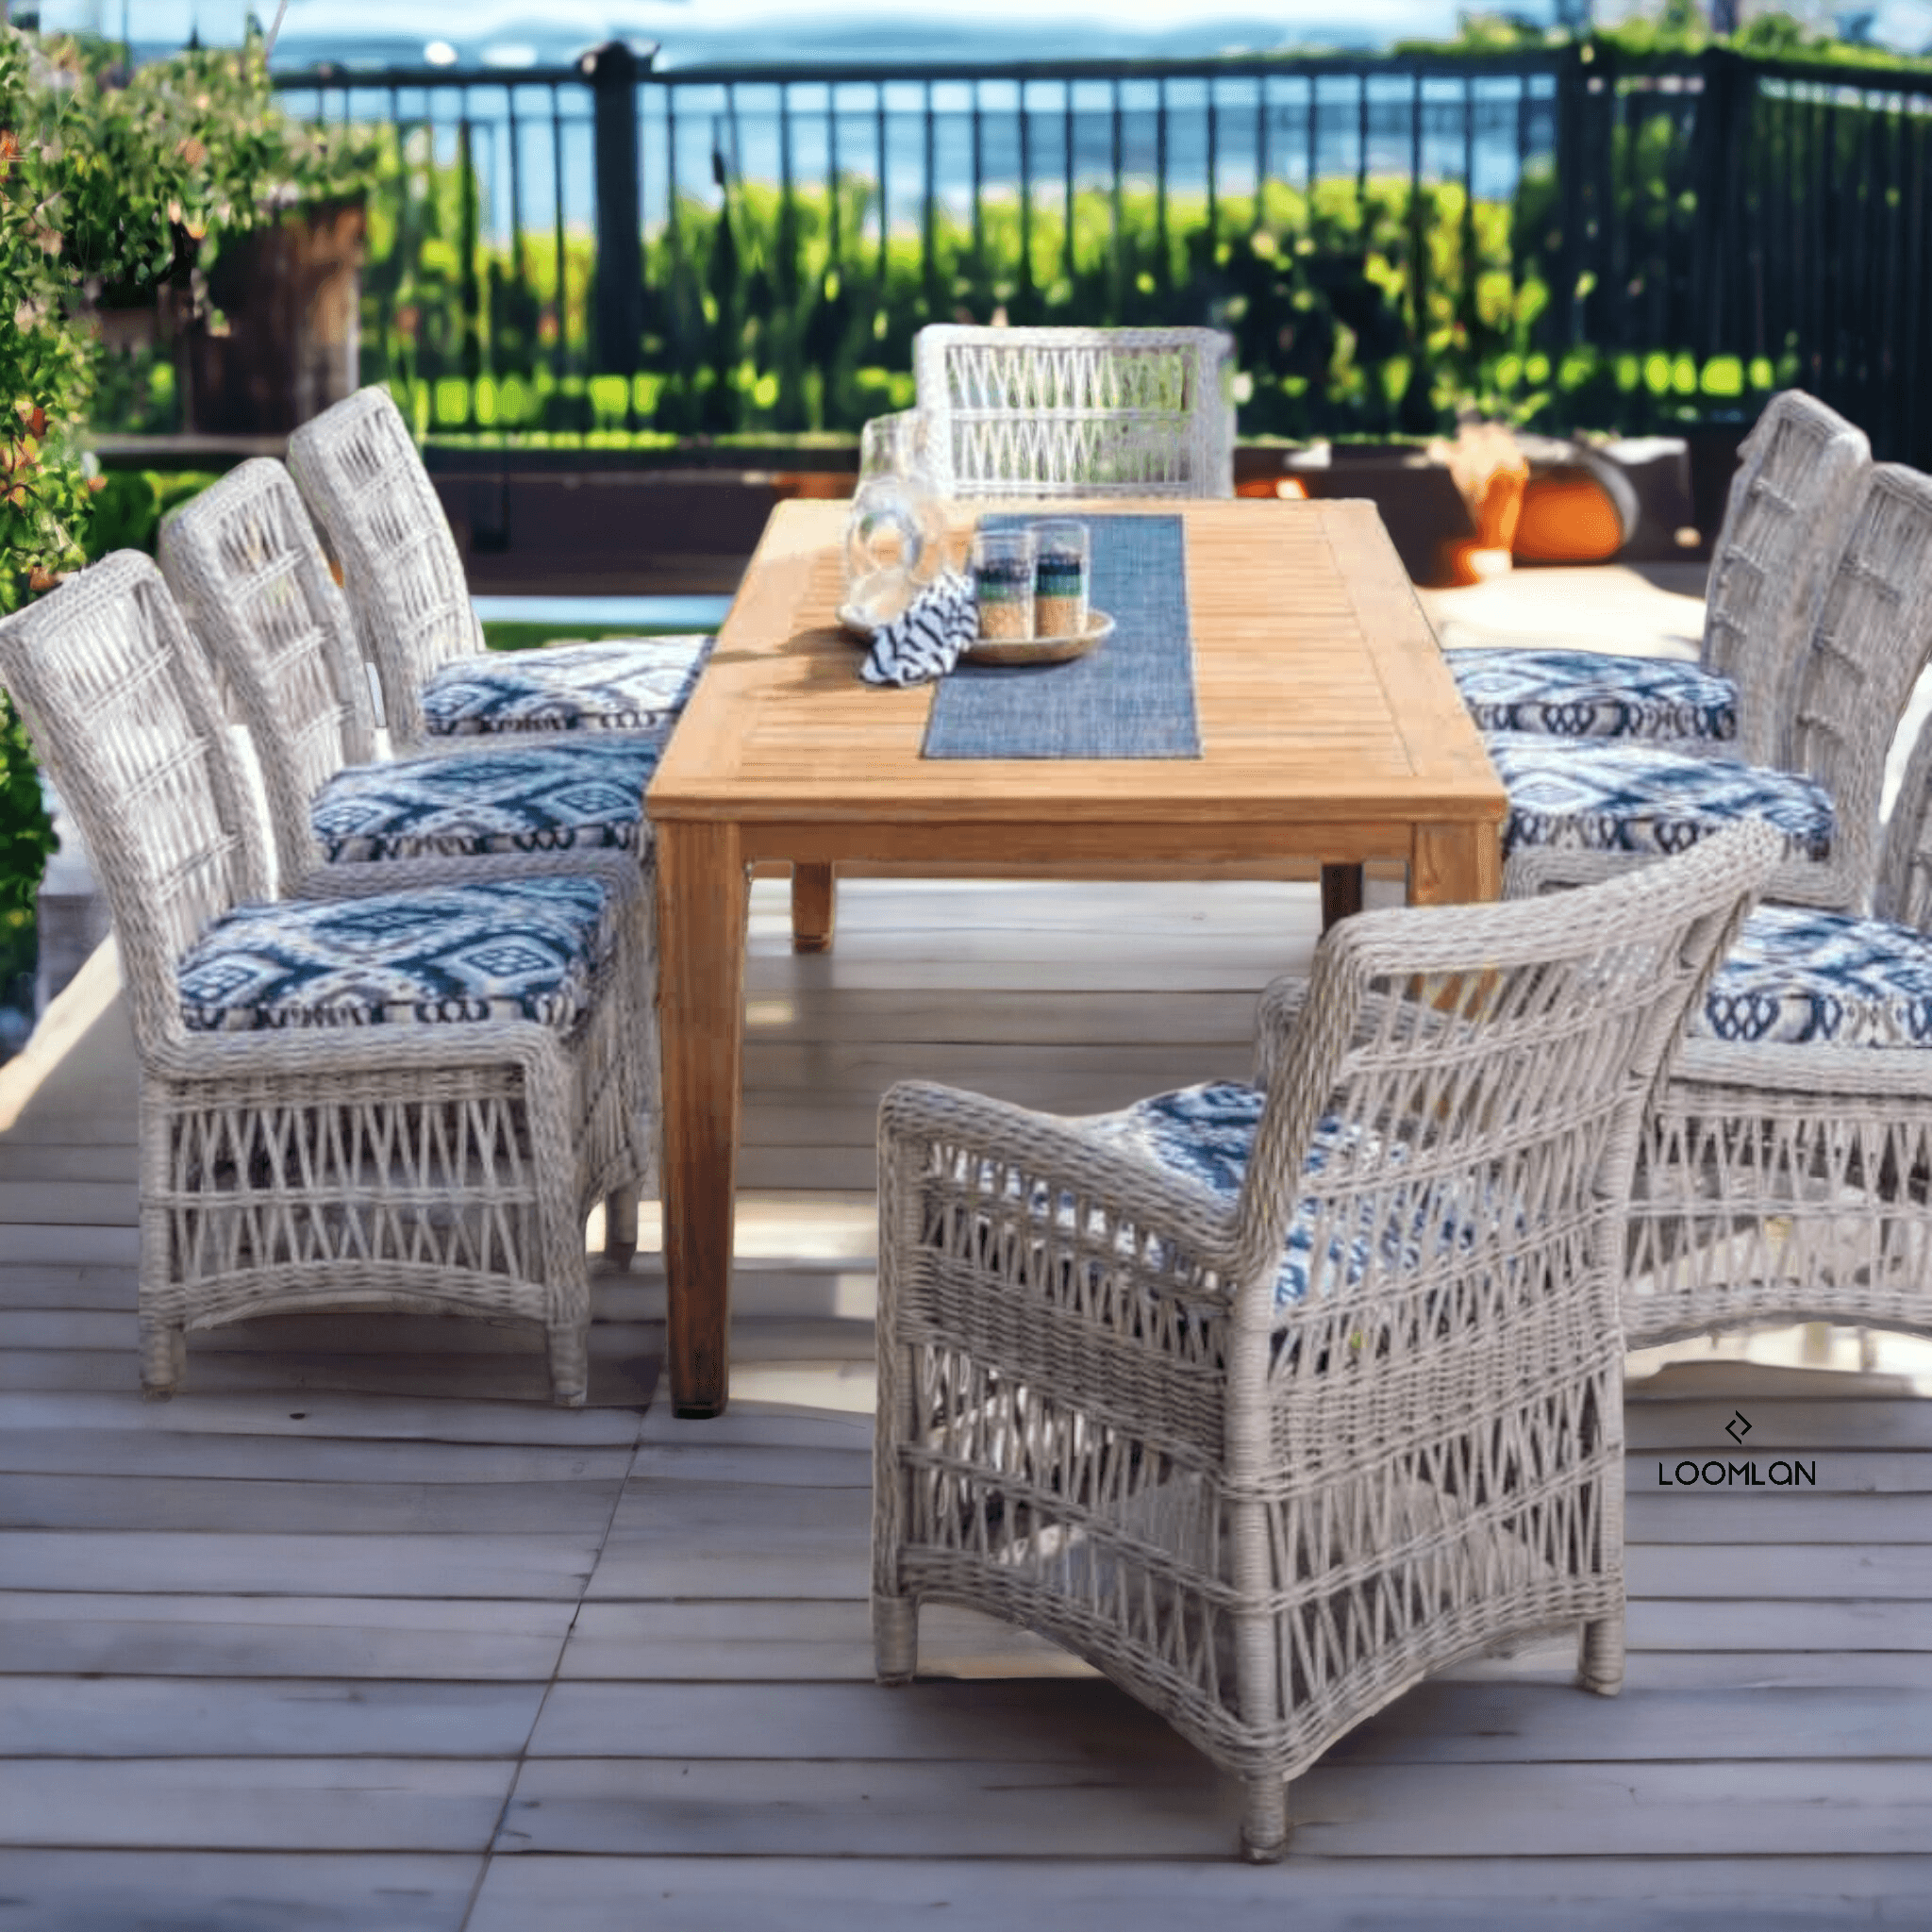 LOOMLAN Outdoor - Mackinac Patio Dining Armchair With Sunbrella Cushion Lloyd Flanders - Outdoor Dining Chairs